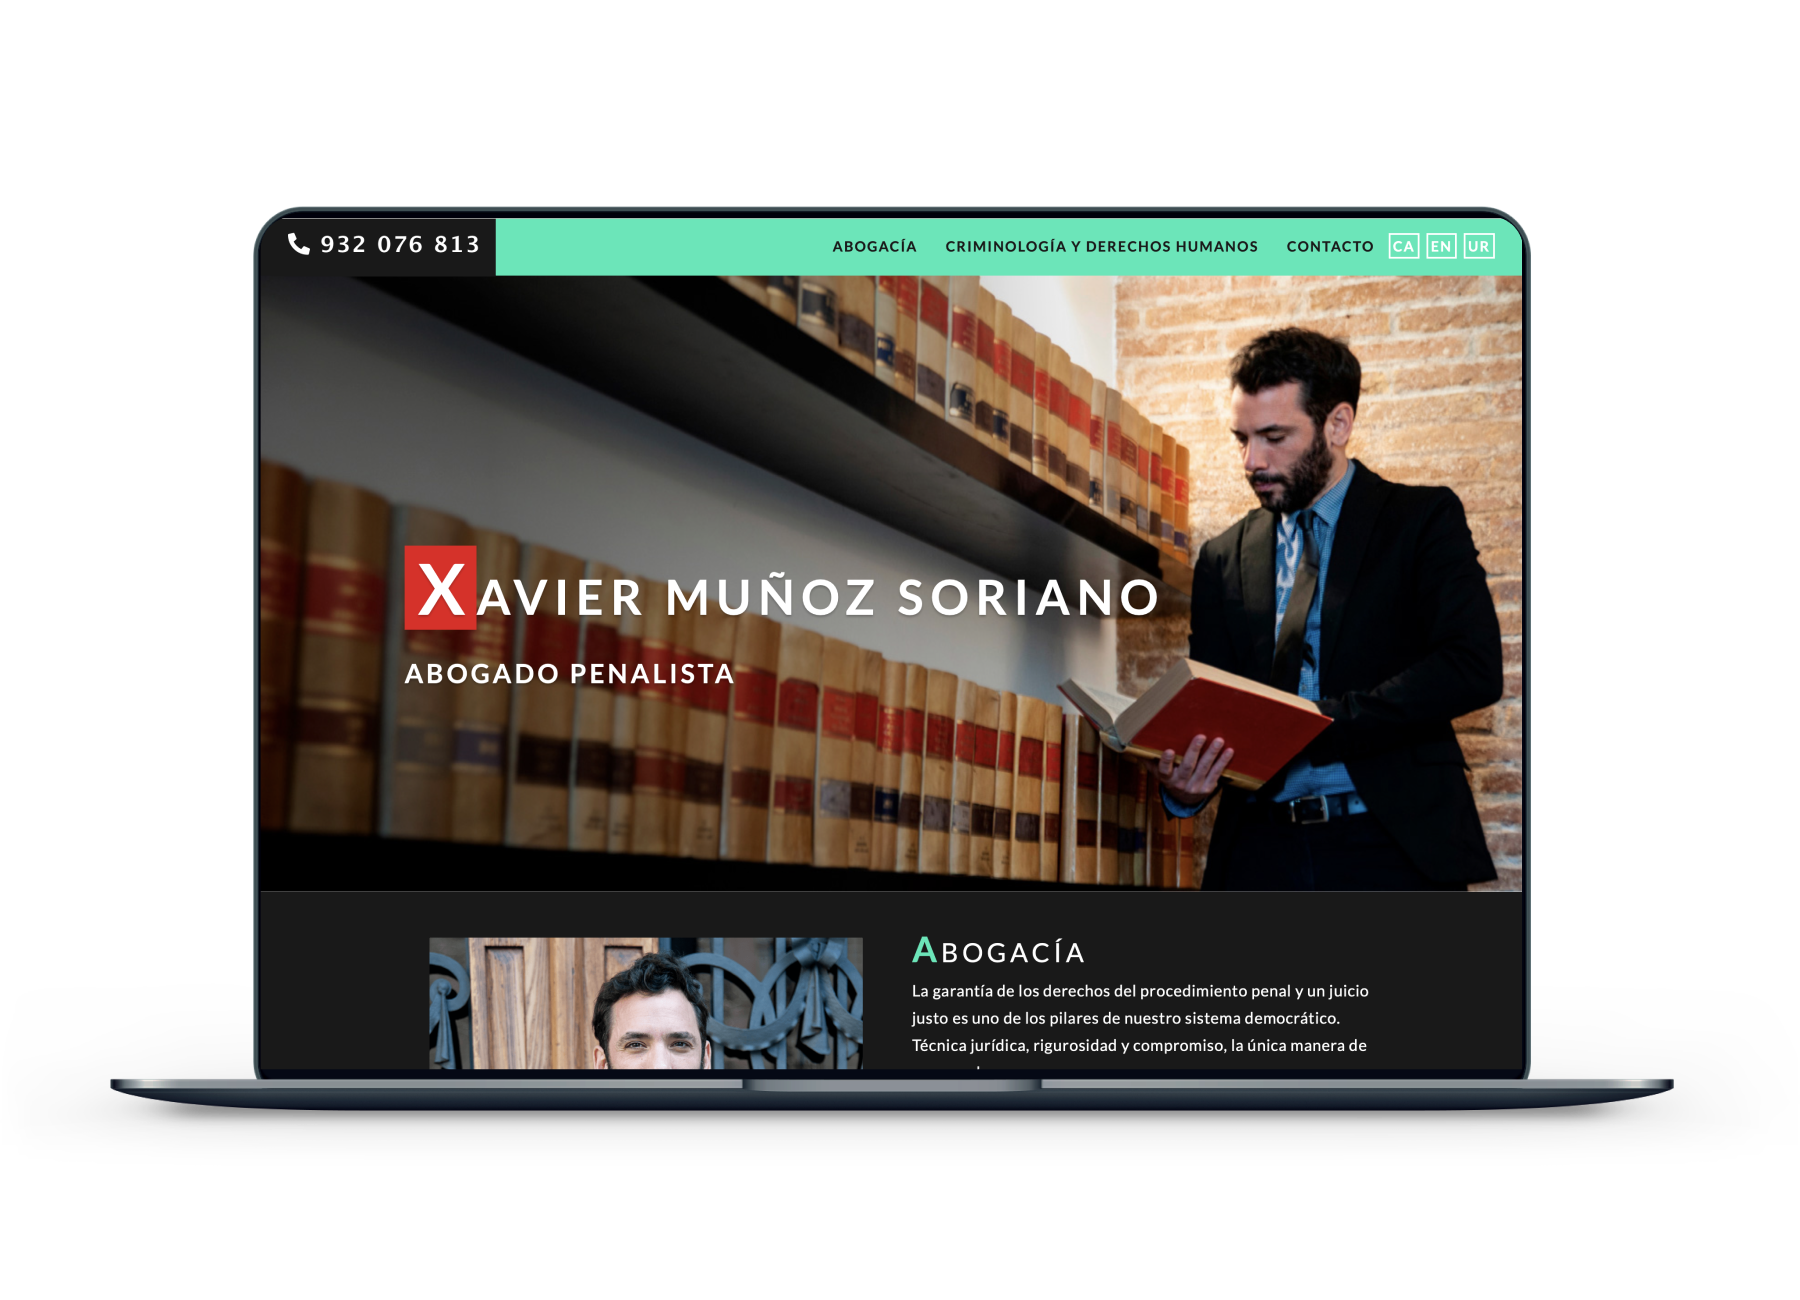 Web portafolio cv online de abogado penalista